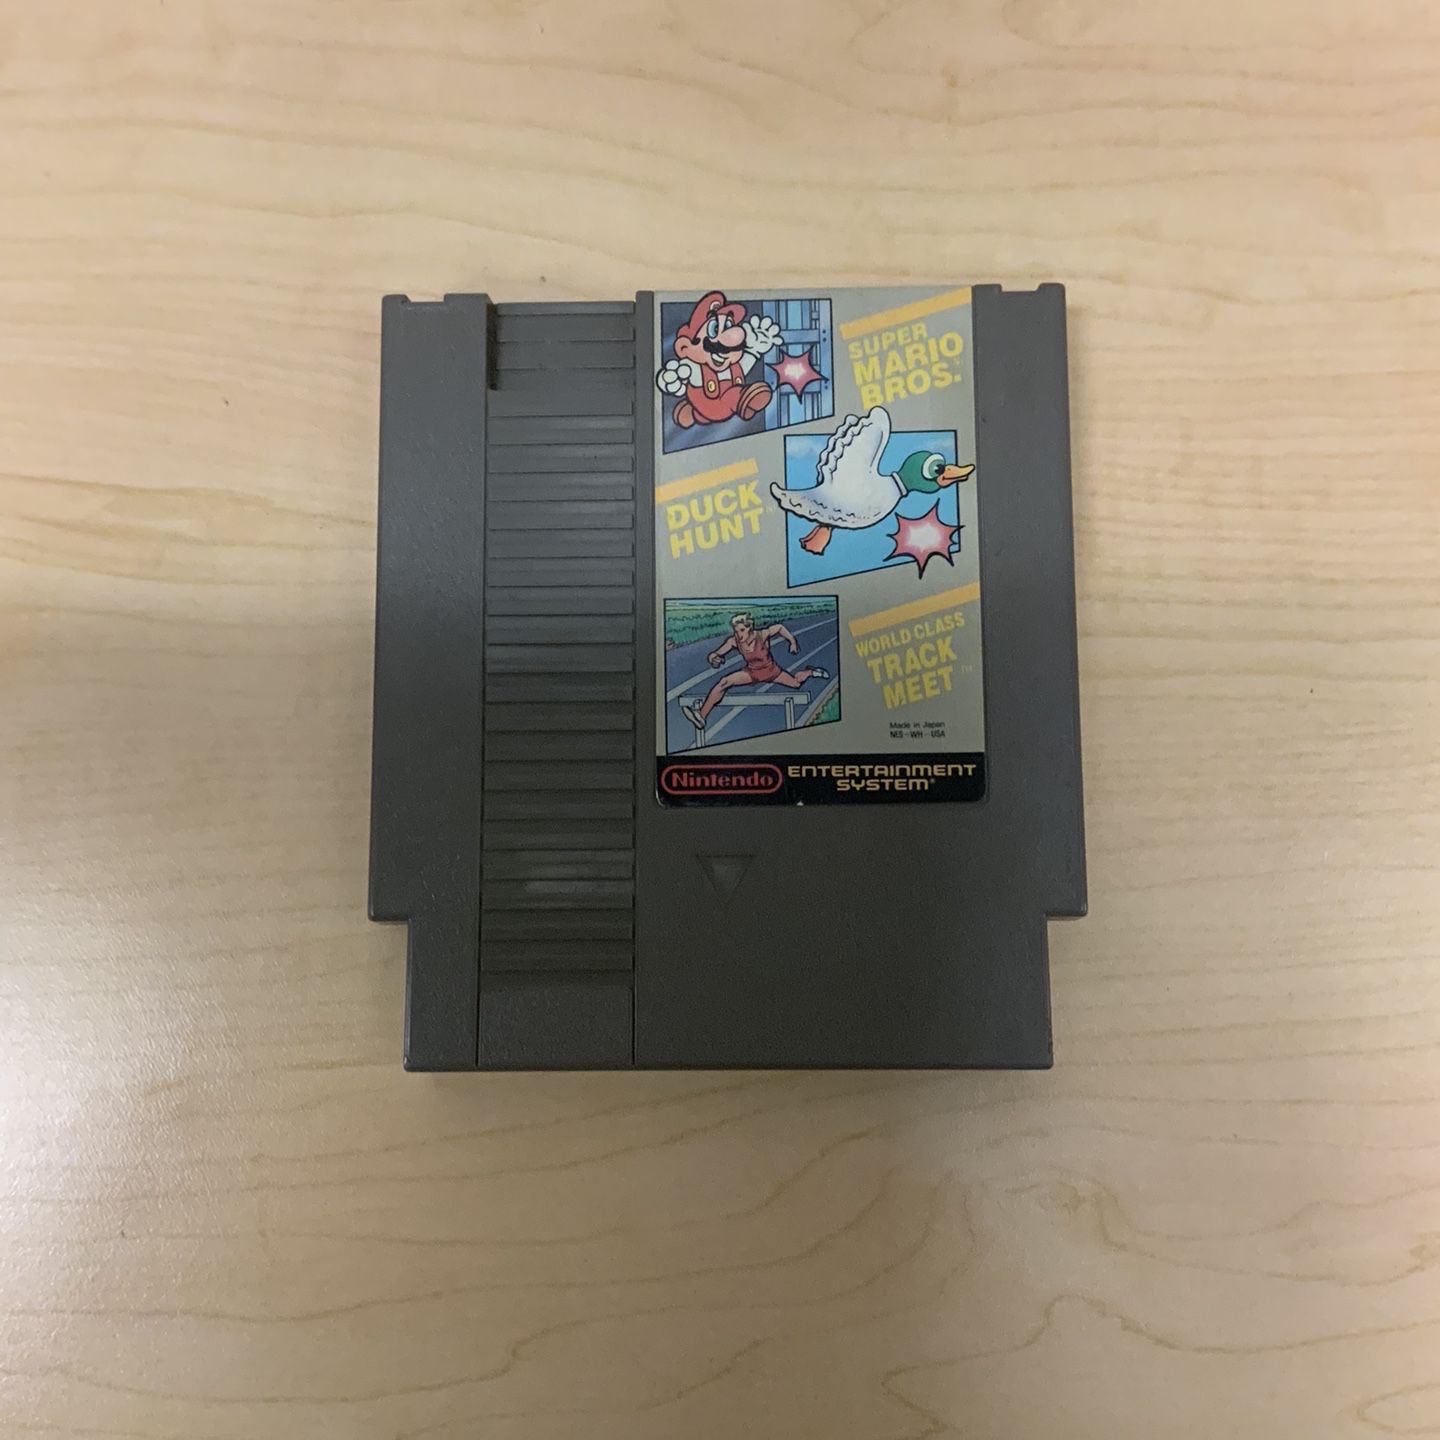 Nintendo NES - Super Mario Bros. - World Class Track - Duck Hunt - Super Pitfall - Gauntlet ( Bundle Or Sold Separate )  